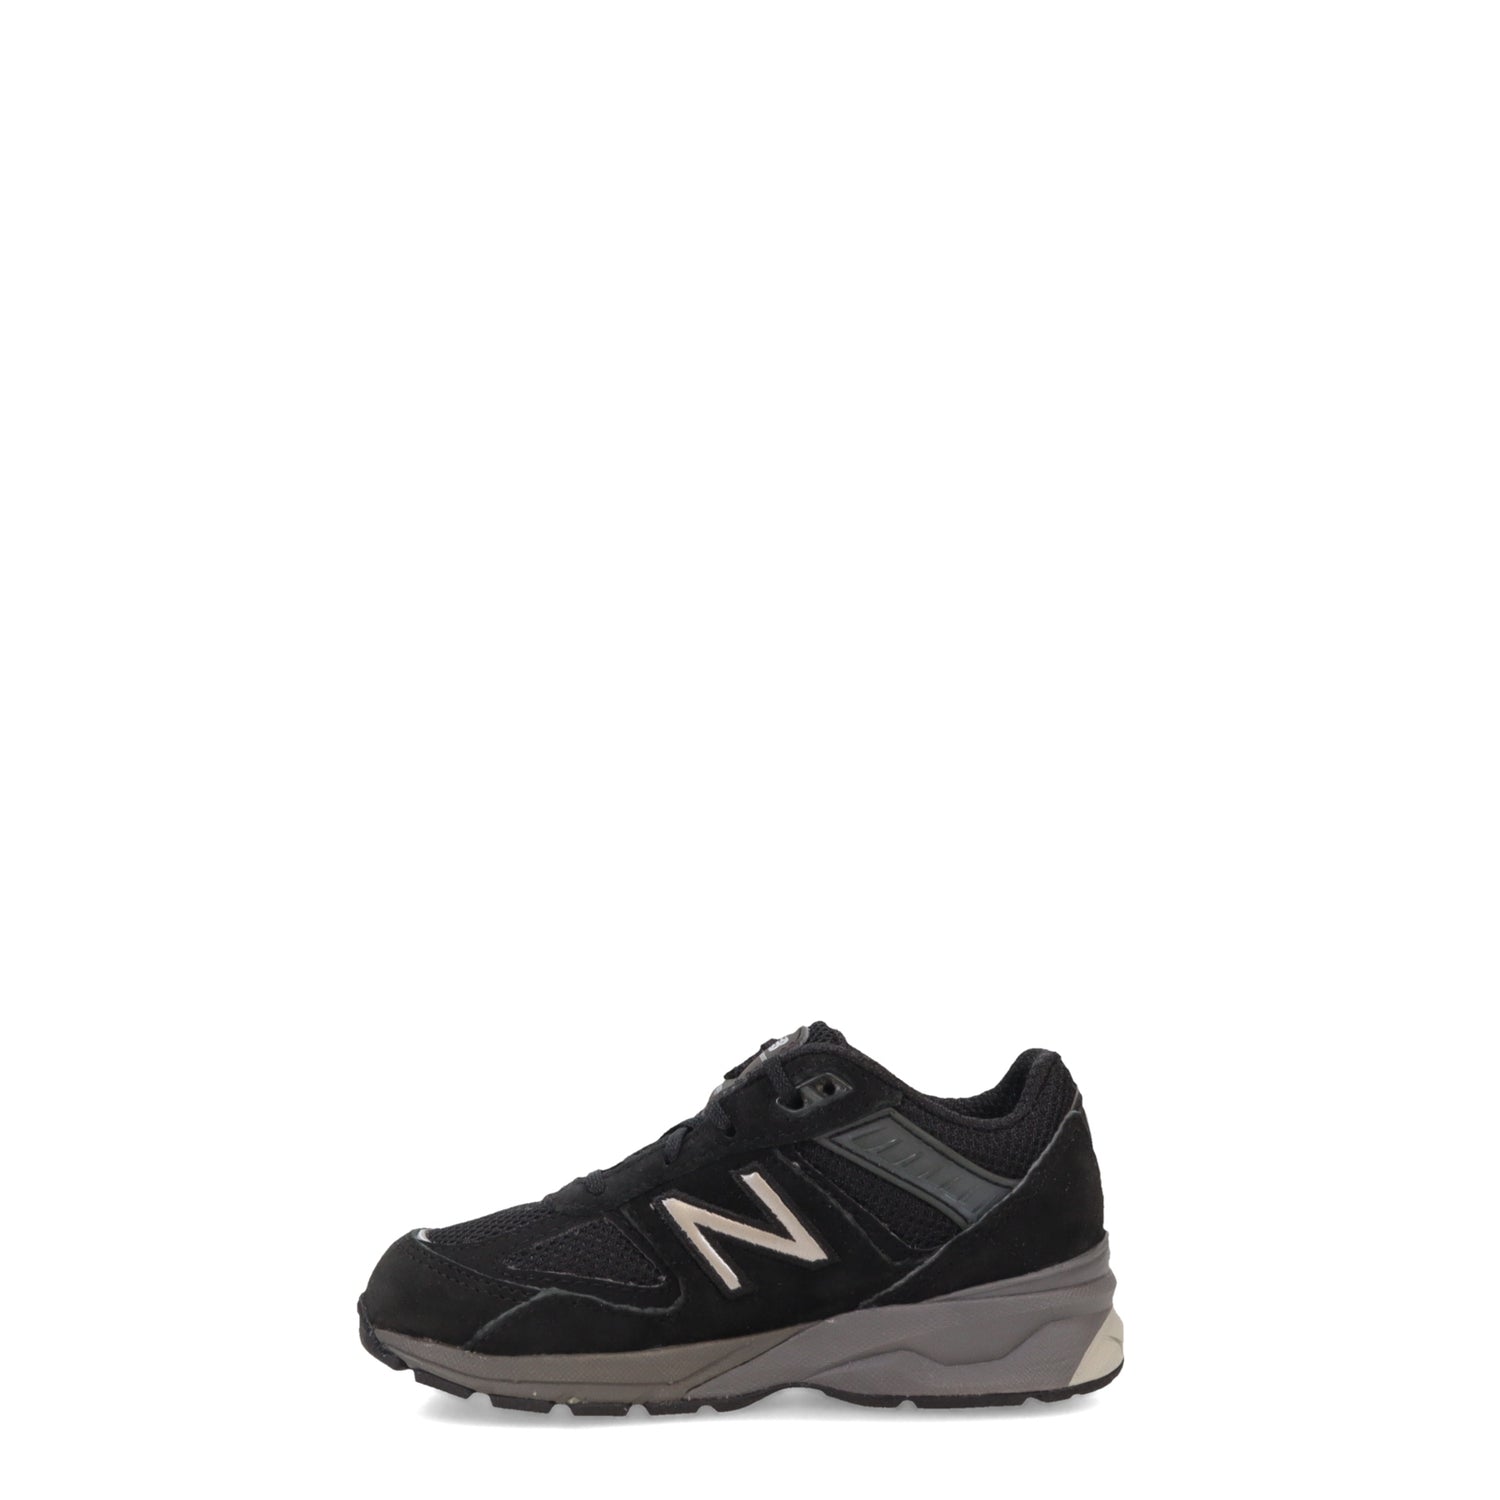 Peltz Shoes  Boy's New Balance 990v5 Sneaker - Toddler Black IC990BK5